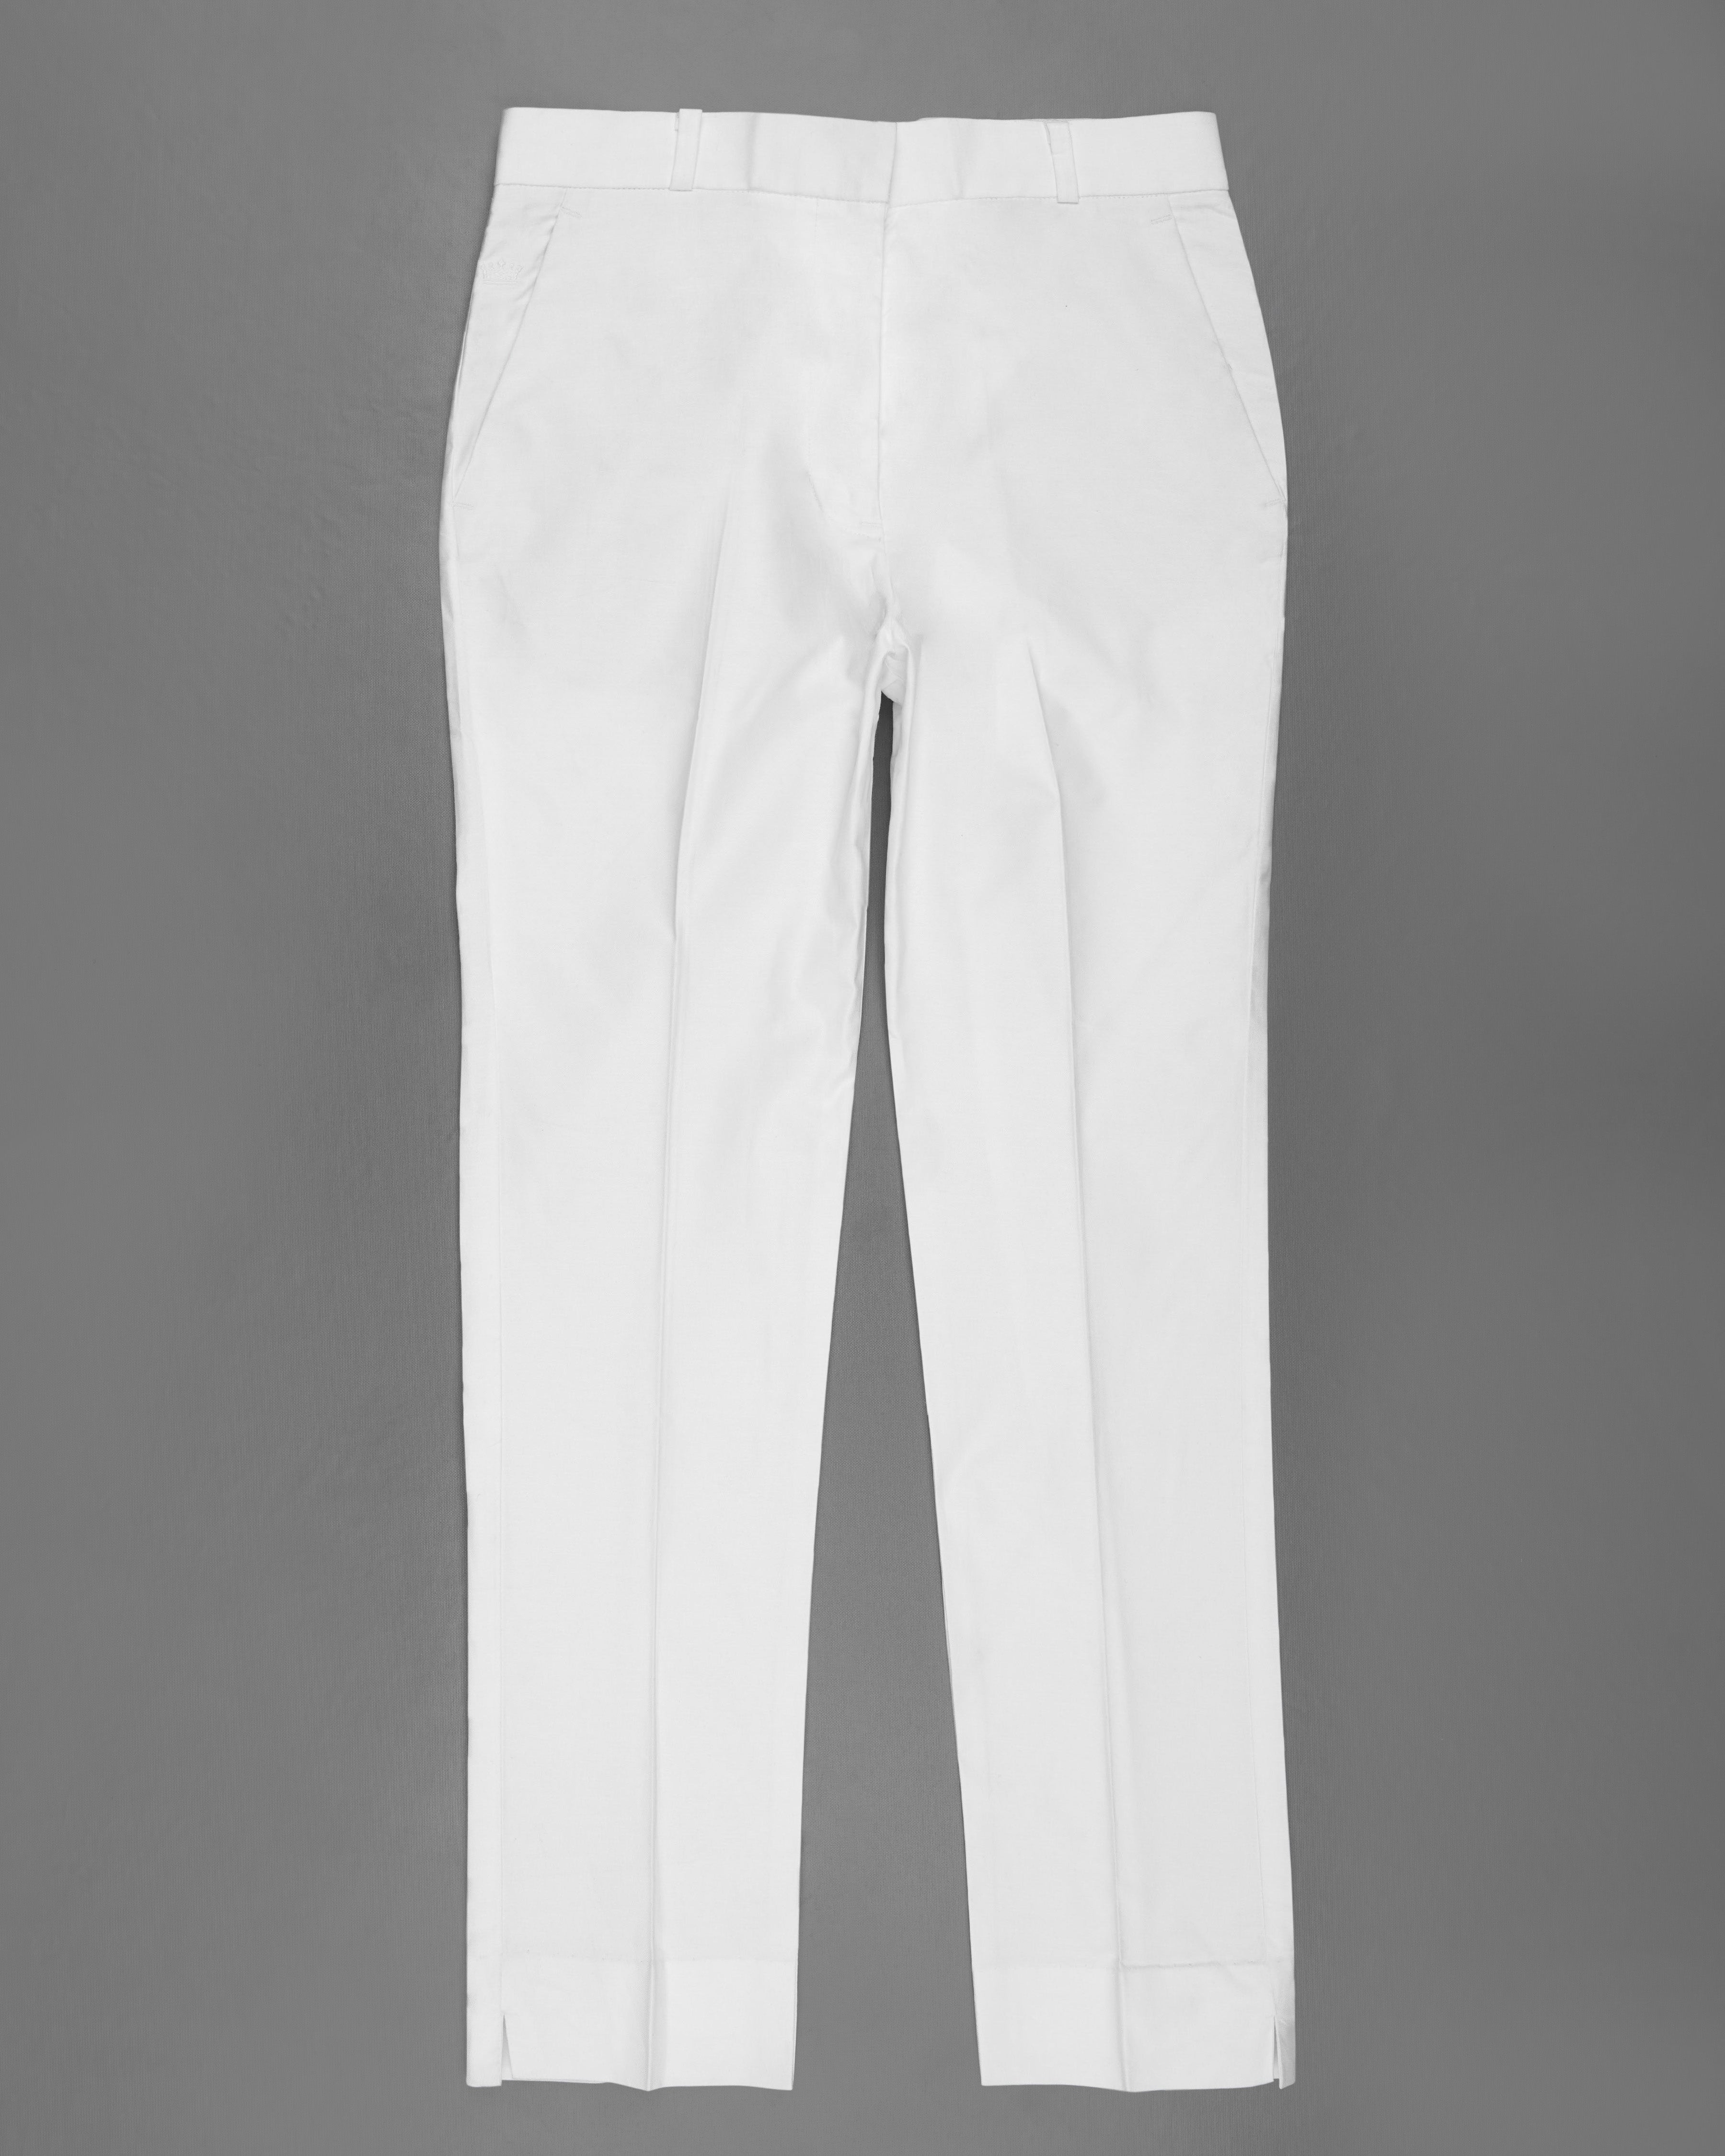 Bright White with Black Premium Cotton Women's Pant WOT005-24, WOT005-26, WOT005-28, WOT005-30, WOT005-32, WOT005-34